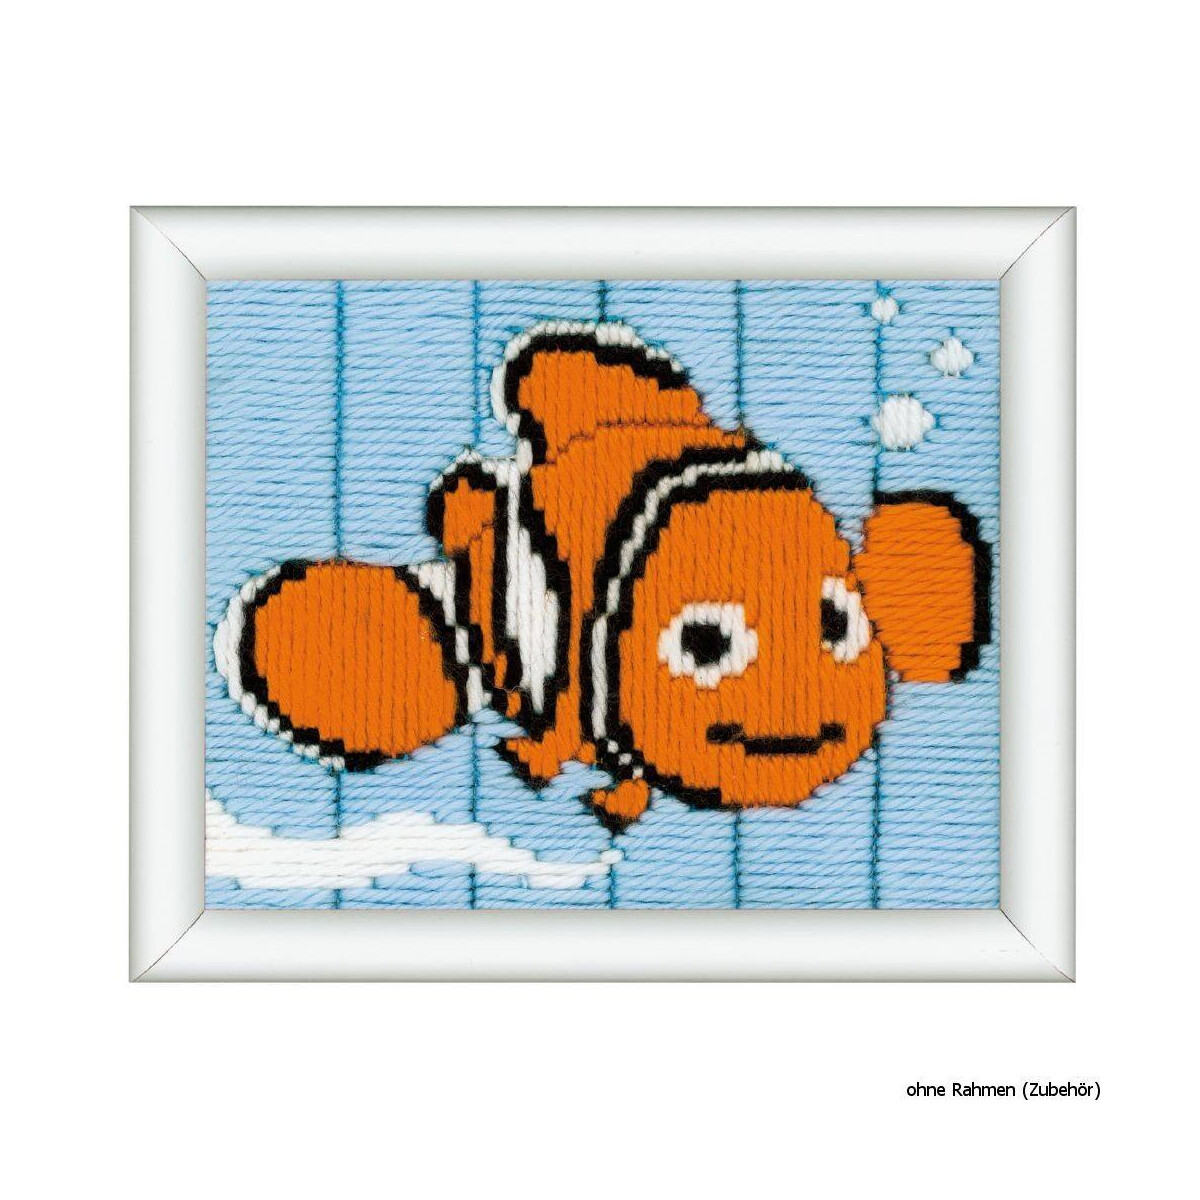 Vervaco stretchsteek borduurpakket "Nemo",...